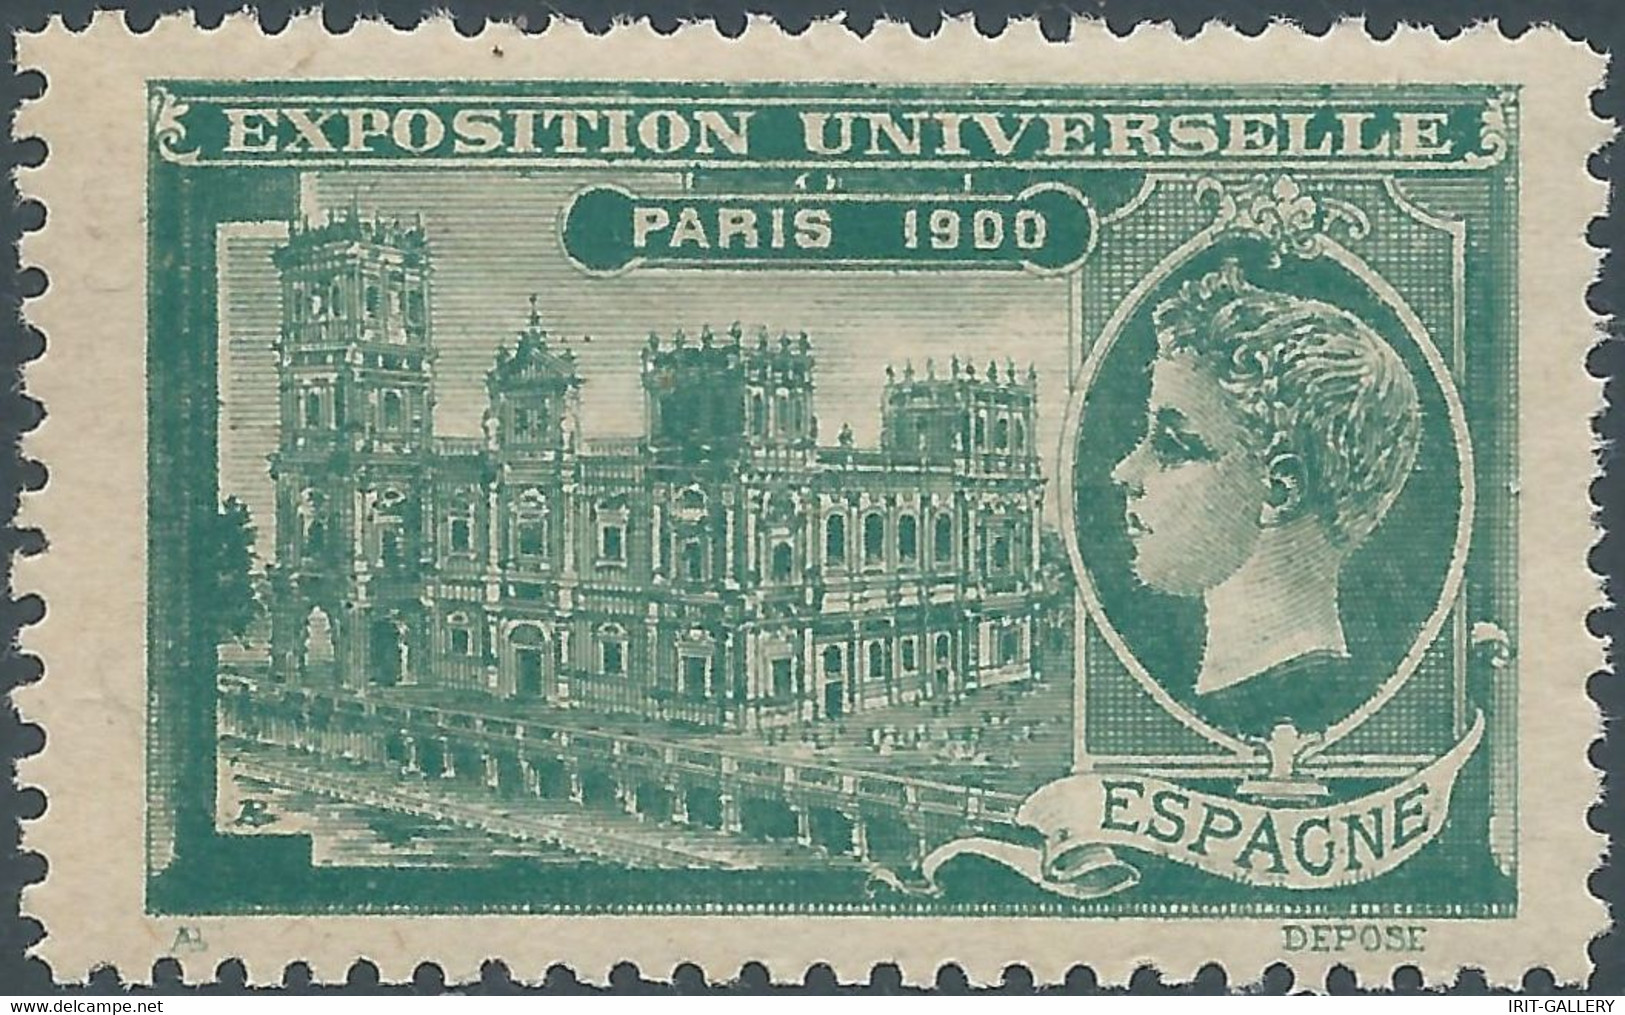 France,Paris 1900 UNIVERSAL EXHIBITION OF Spagne - Spain ,Trace Of Hinged - 1900 – Parigi (Francia)